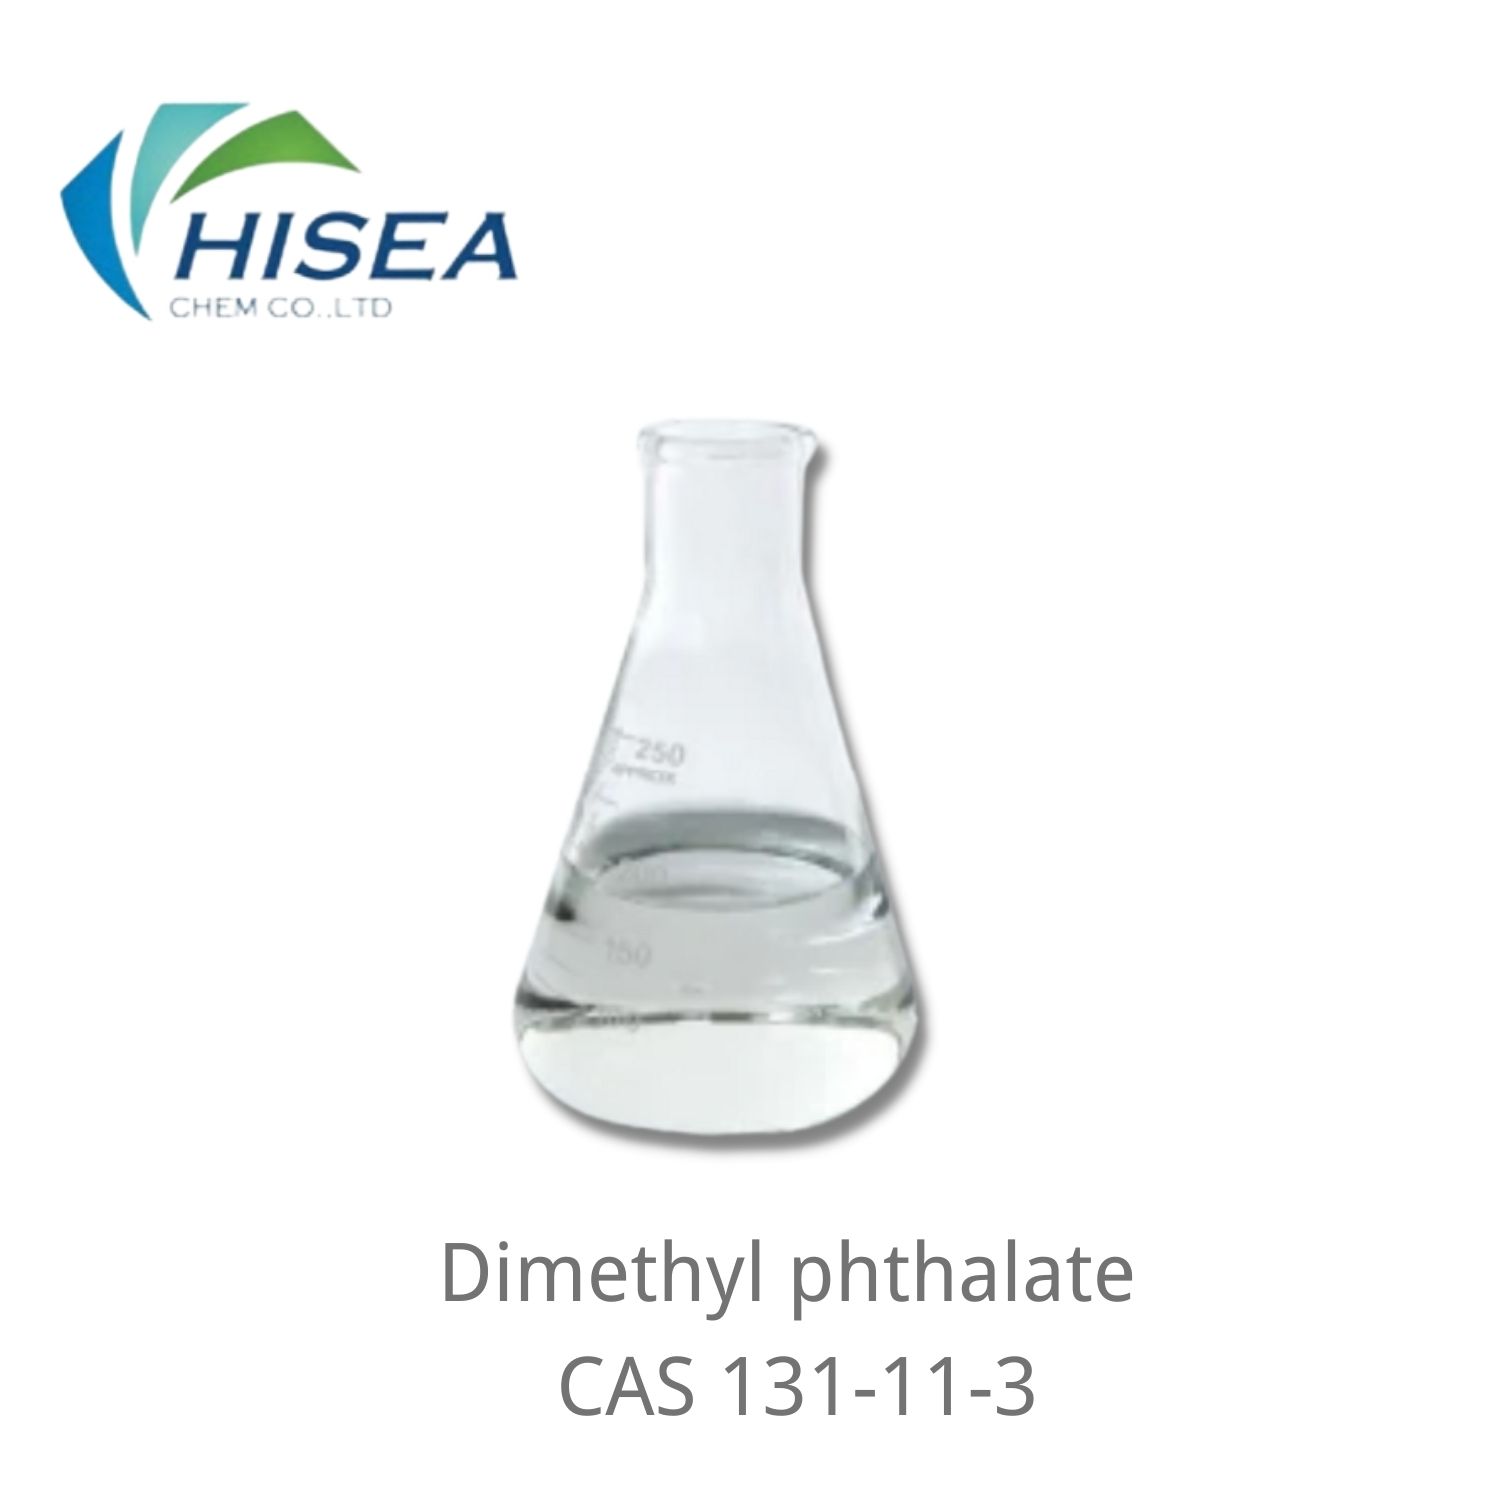 Sintesis Komposit Pelarut Dimethyl Phthalate